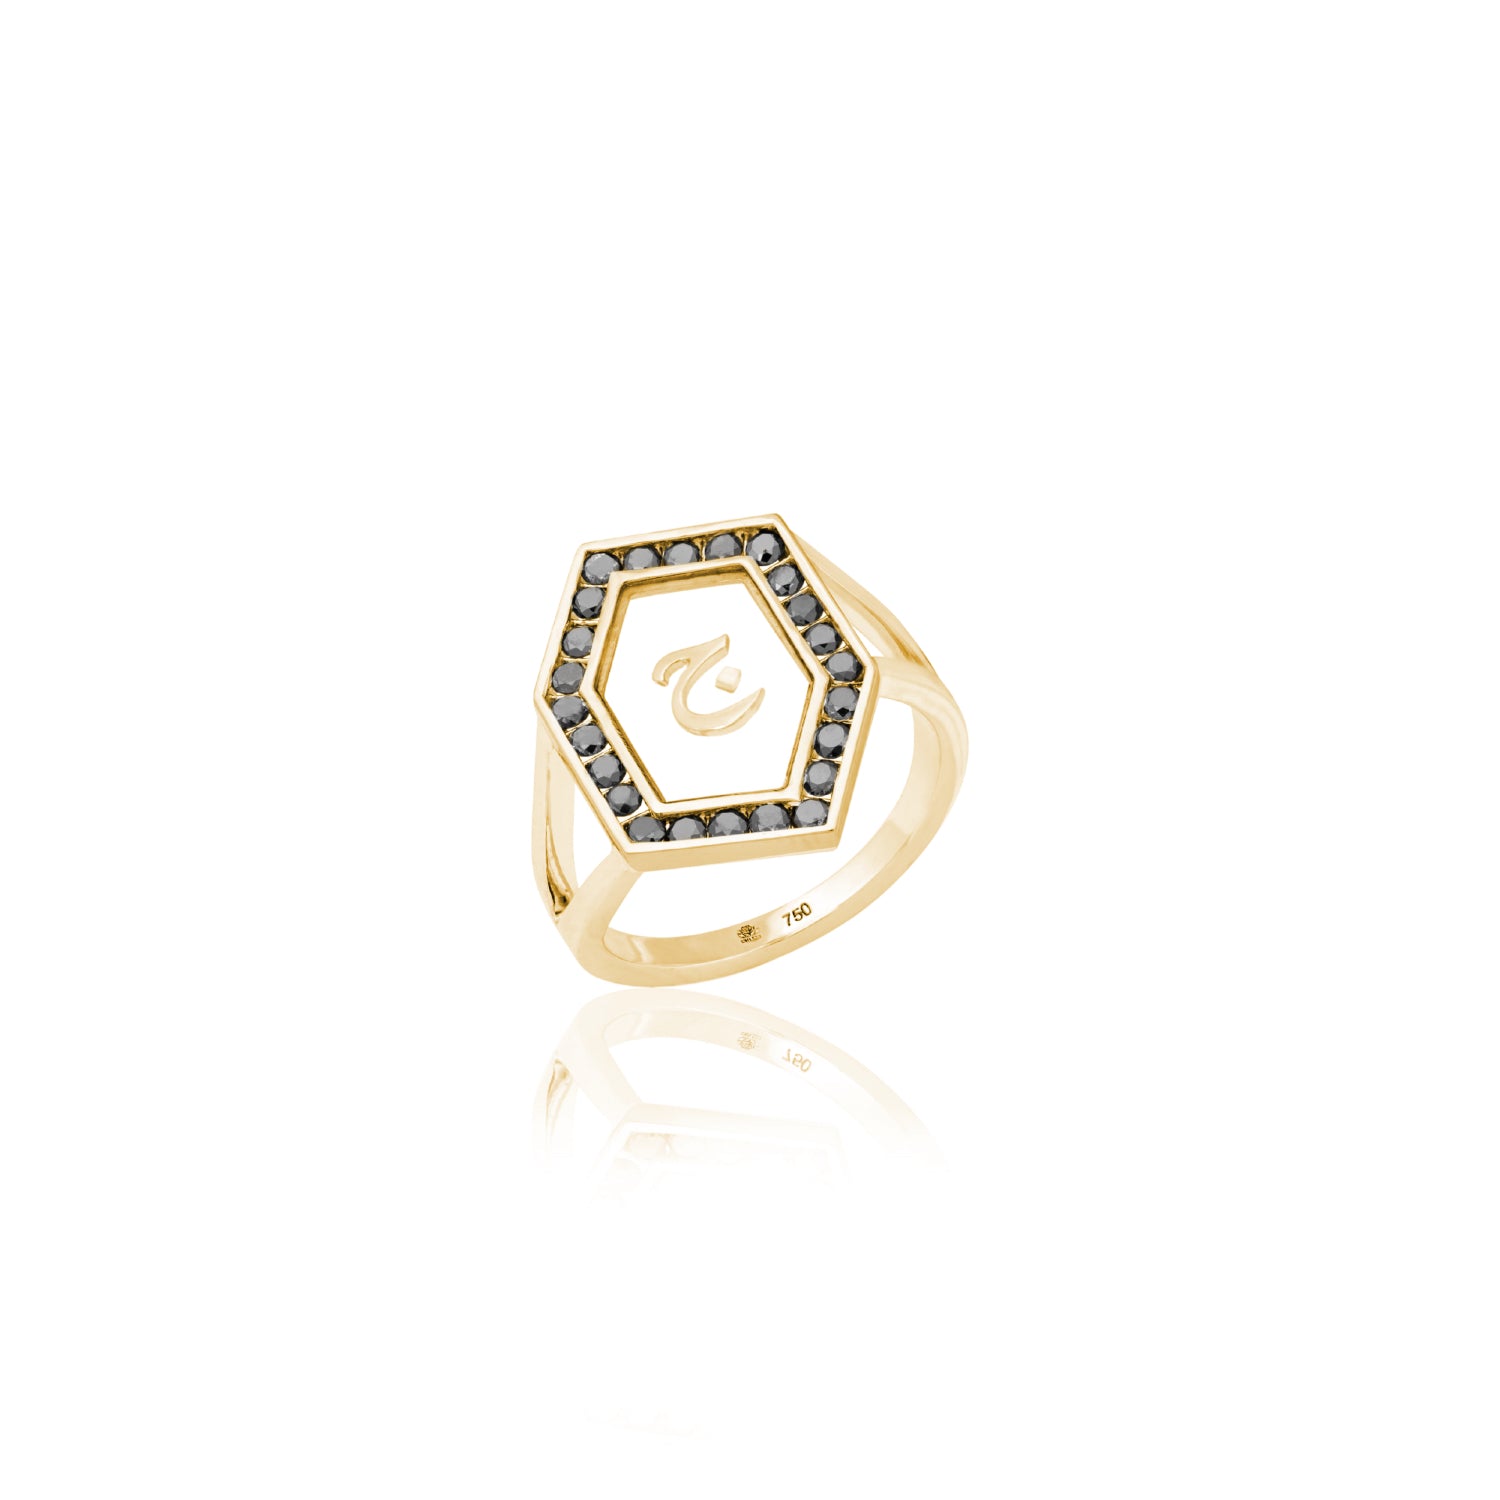 Qamoos 1.0 Letter ج Black Diamond Ring in Yellow Gold